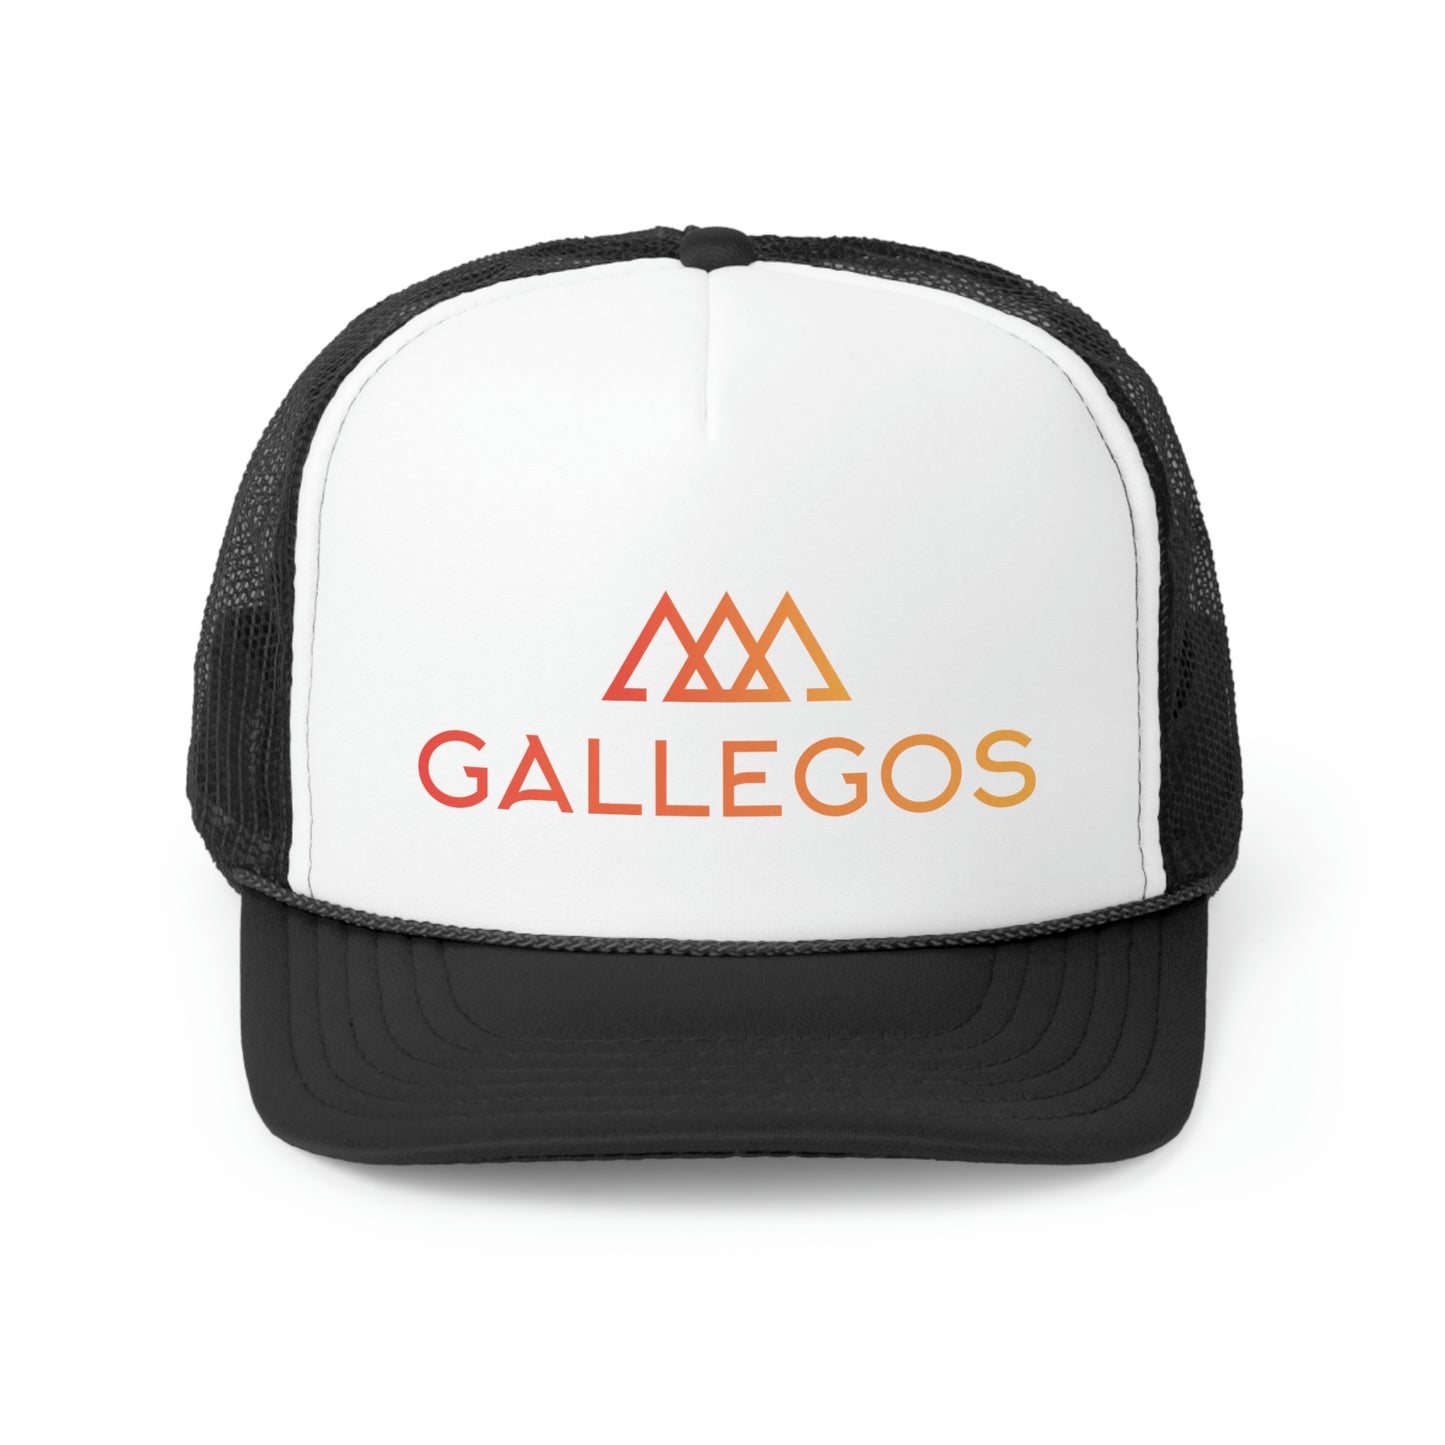 Gallegos Mortgage Trucker Hats